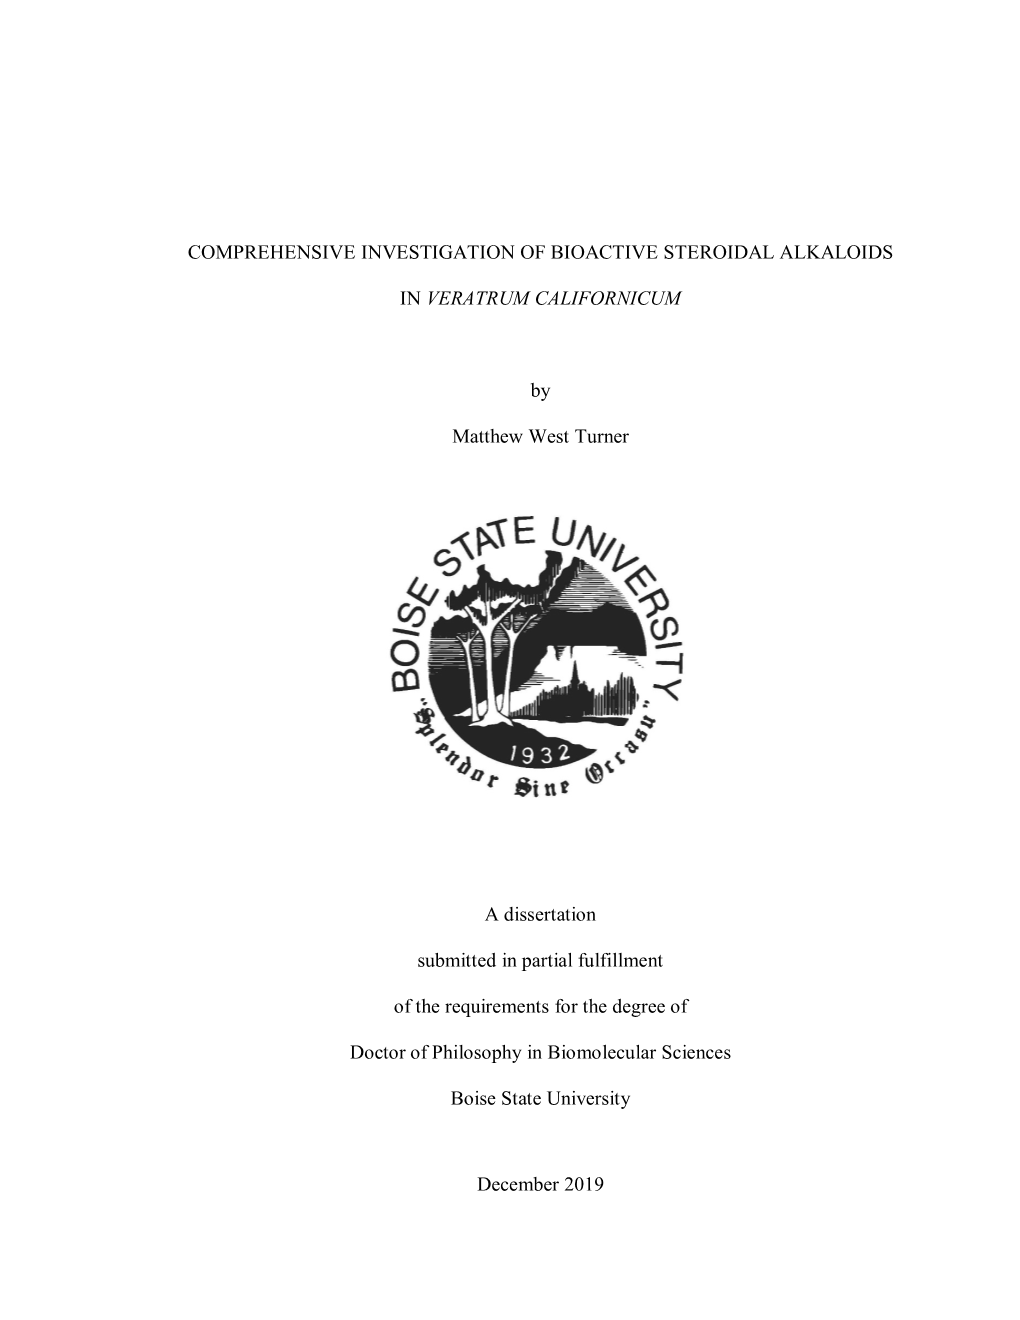 Comprehensive Investigation of Bioactive Steroidal Alkaloids in Veratrum Californicum